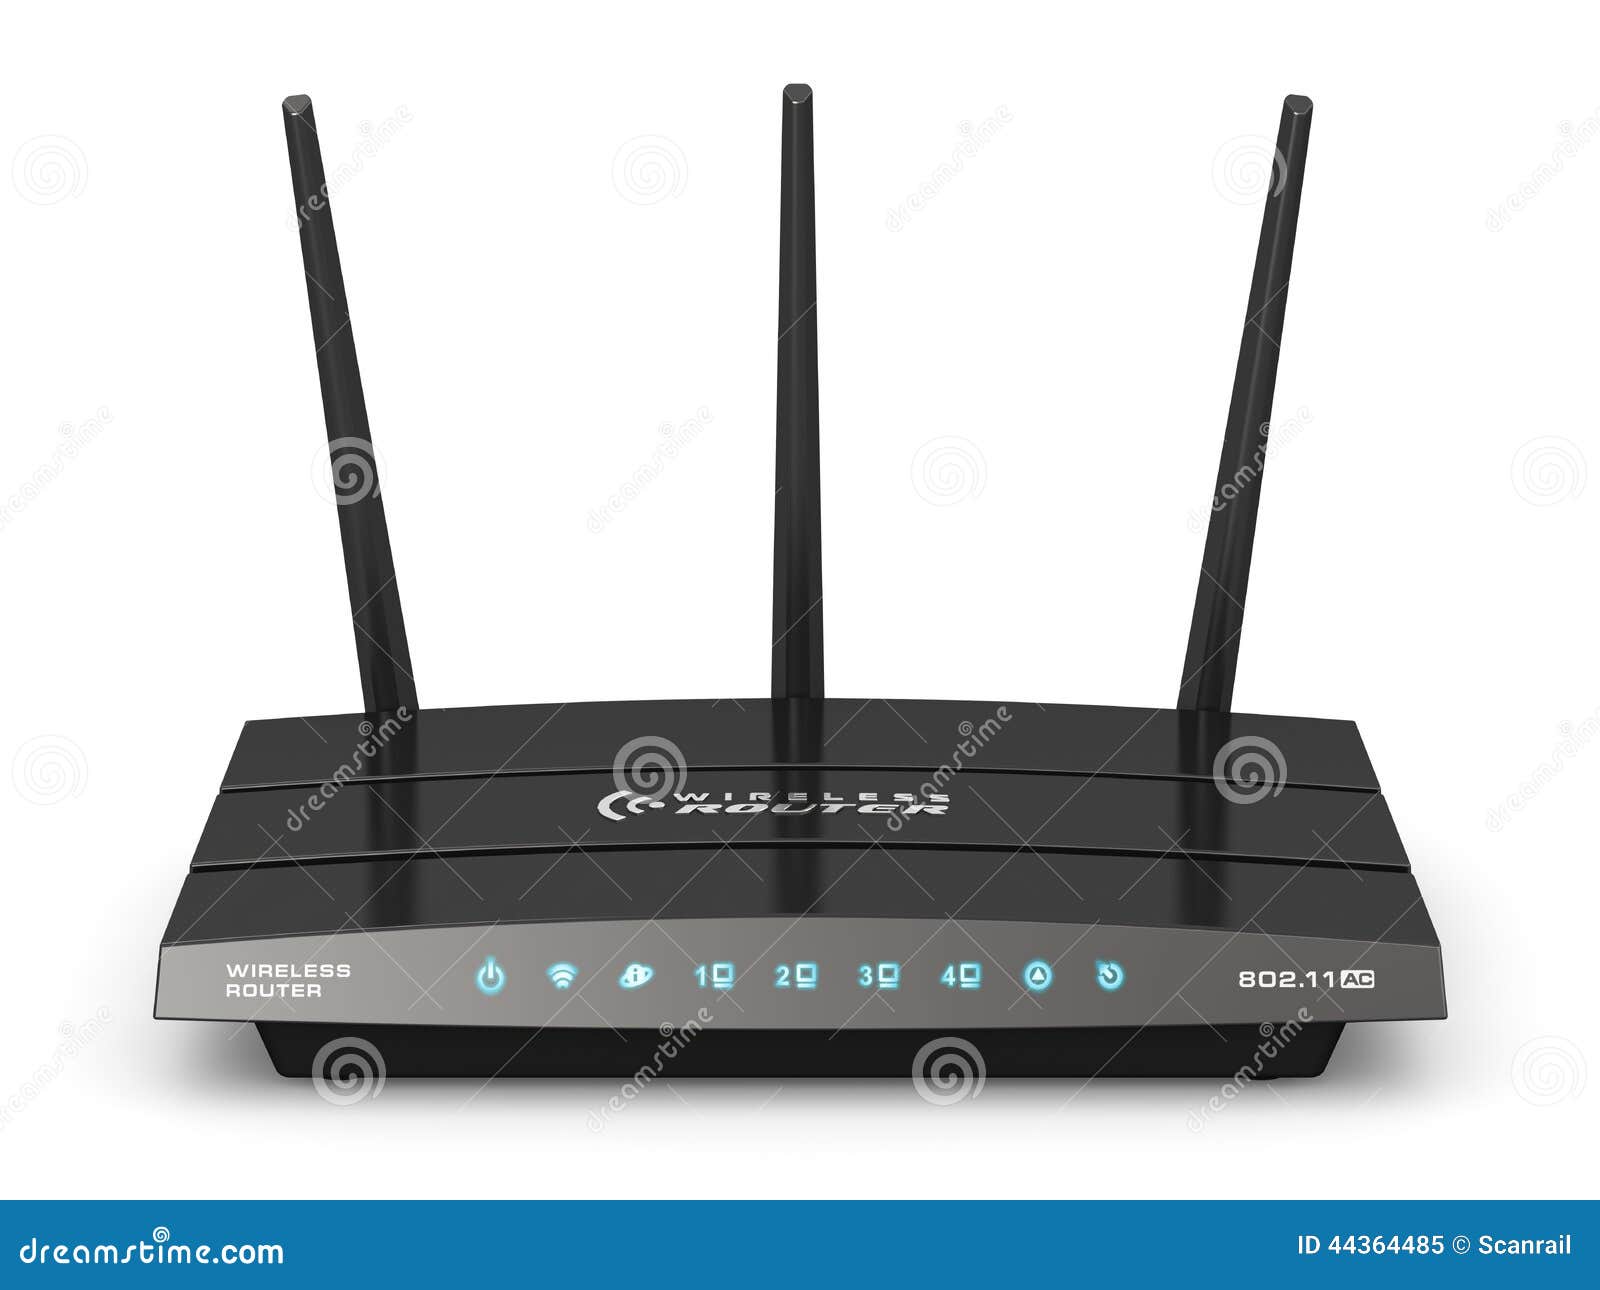 Wireless Internet Router Stock Illustration - Image: 44364485